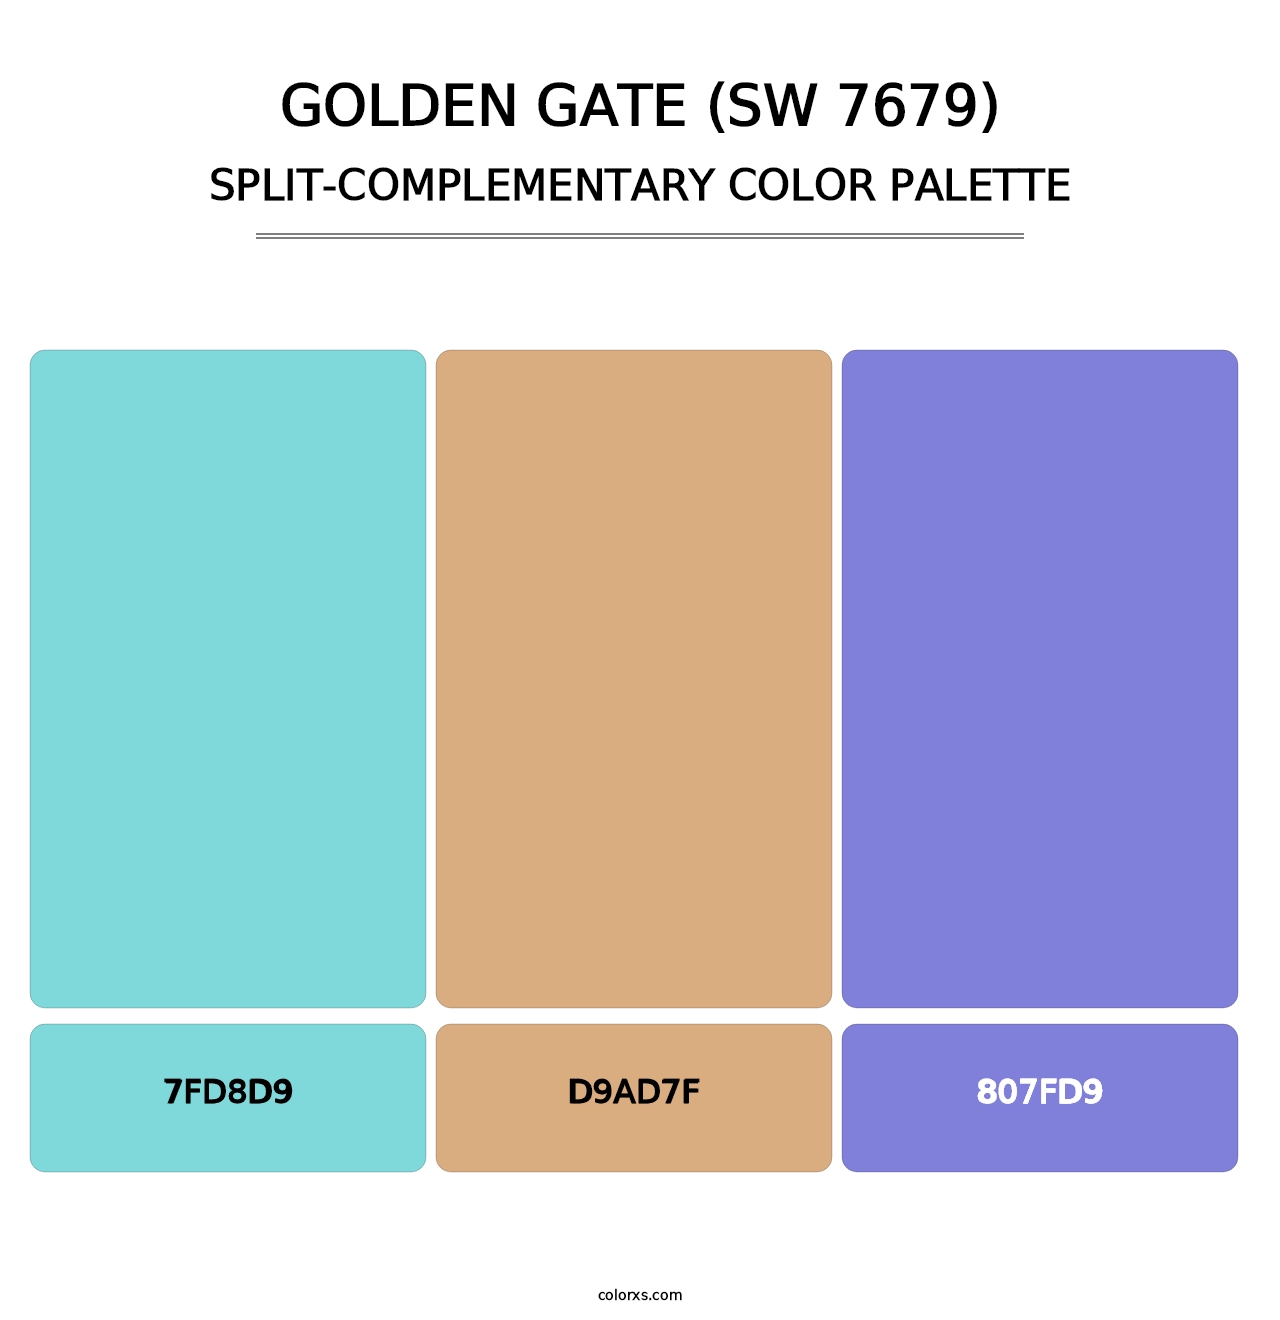 Golden Gate (SW 7679) - Split-Complementary Color Palette